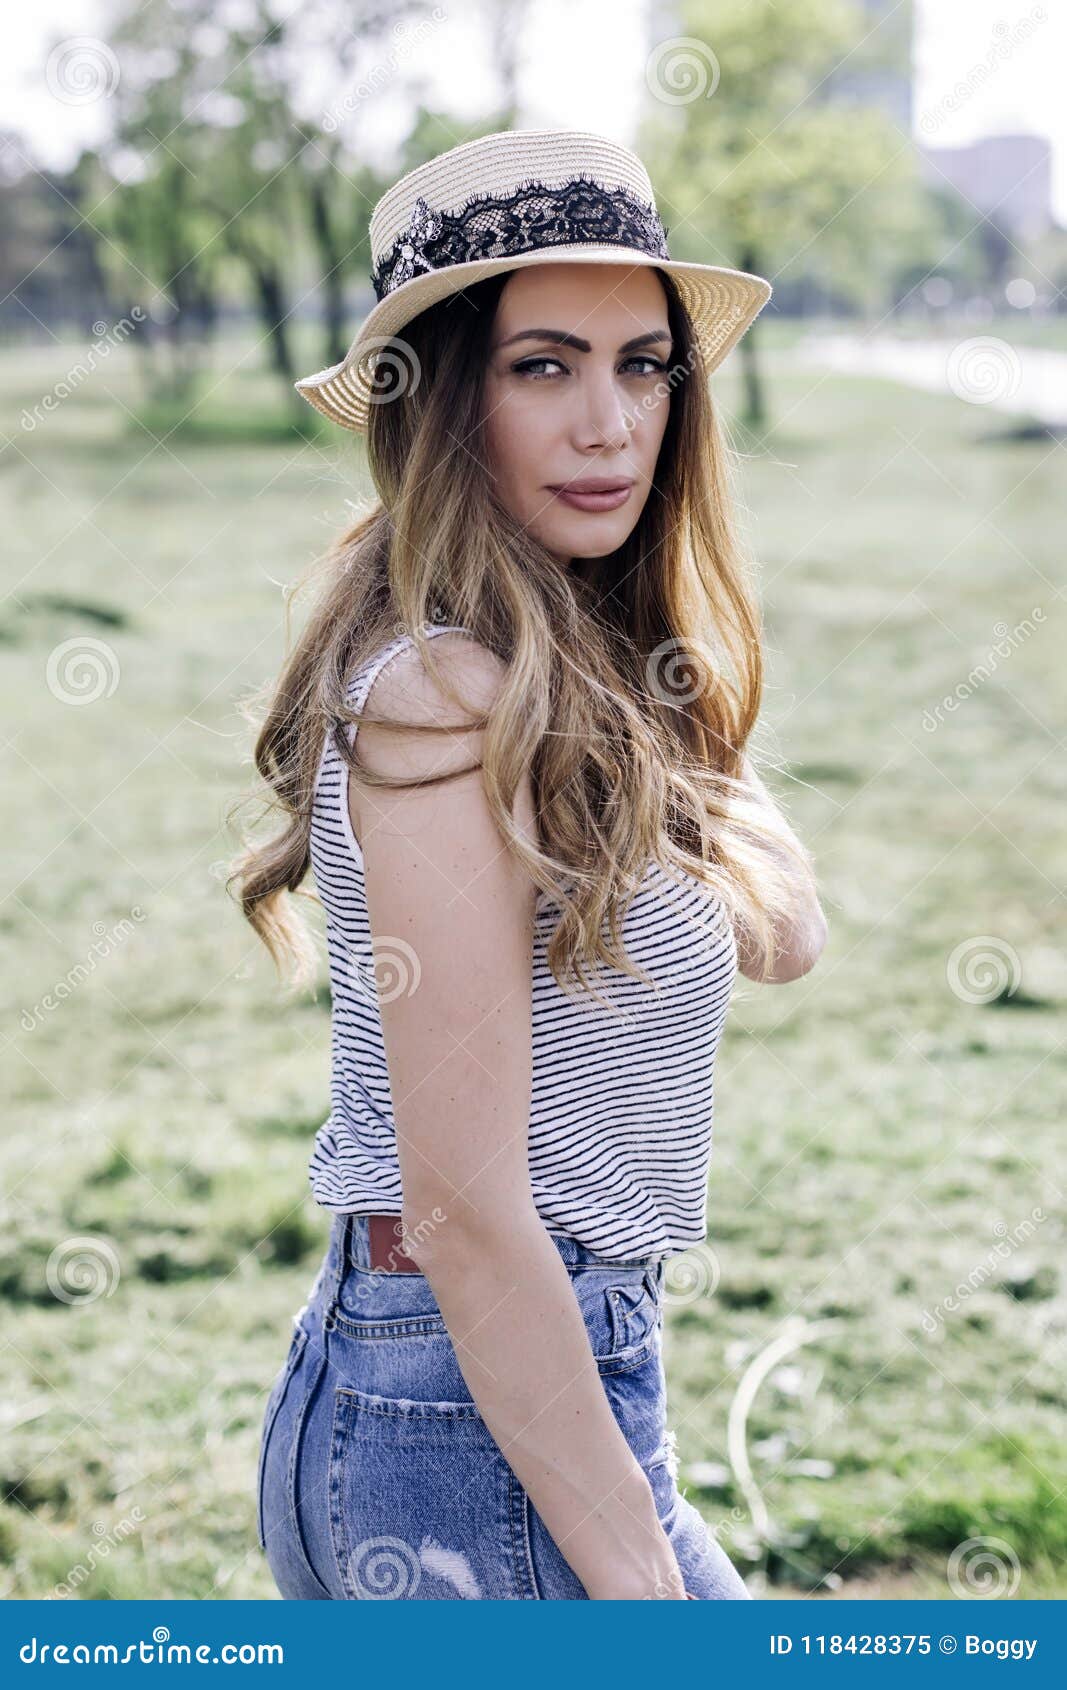 https://thumbs.dreamstime.com/z/portrait-beautiful-elegant-woman-hat-posing-park-sunny-summer-day-portrait-beautiful-elegant-woman-118428375.jpg